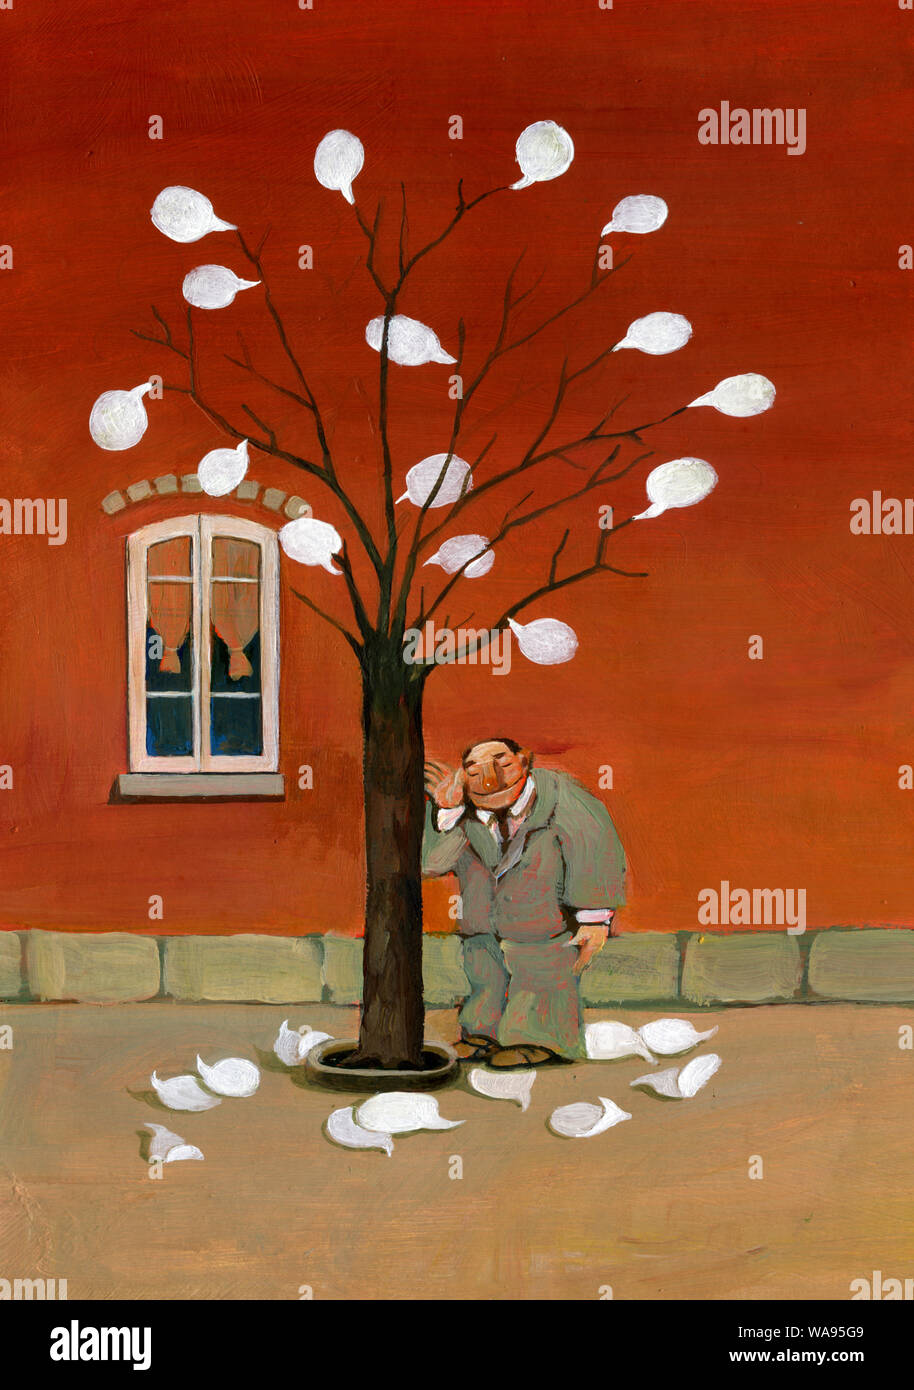 Man listens to tree the leaves of the tree are comics metaphor of natureÕs teaching surreal acrylic illustration Stock Photo